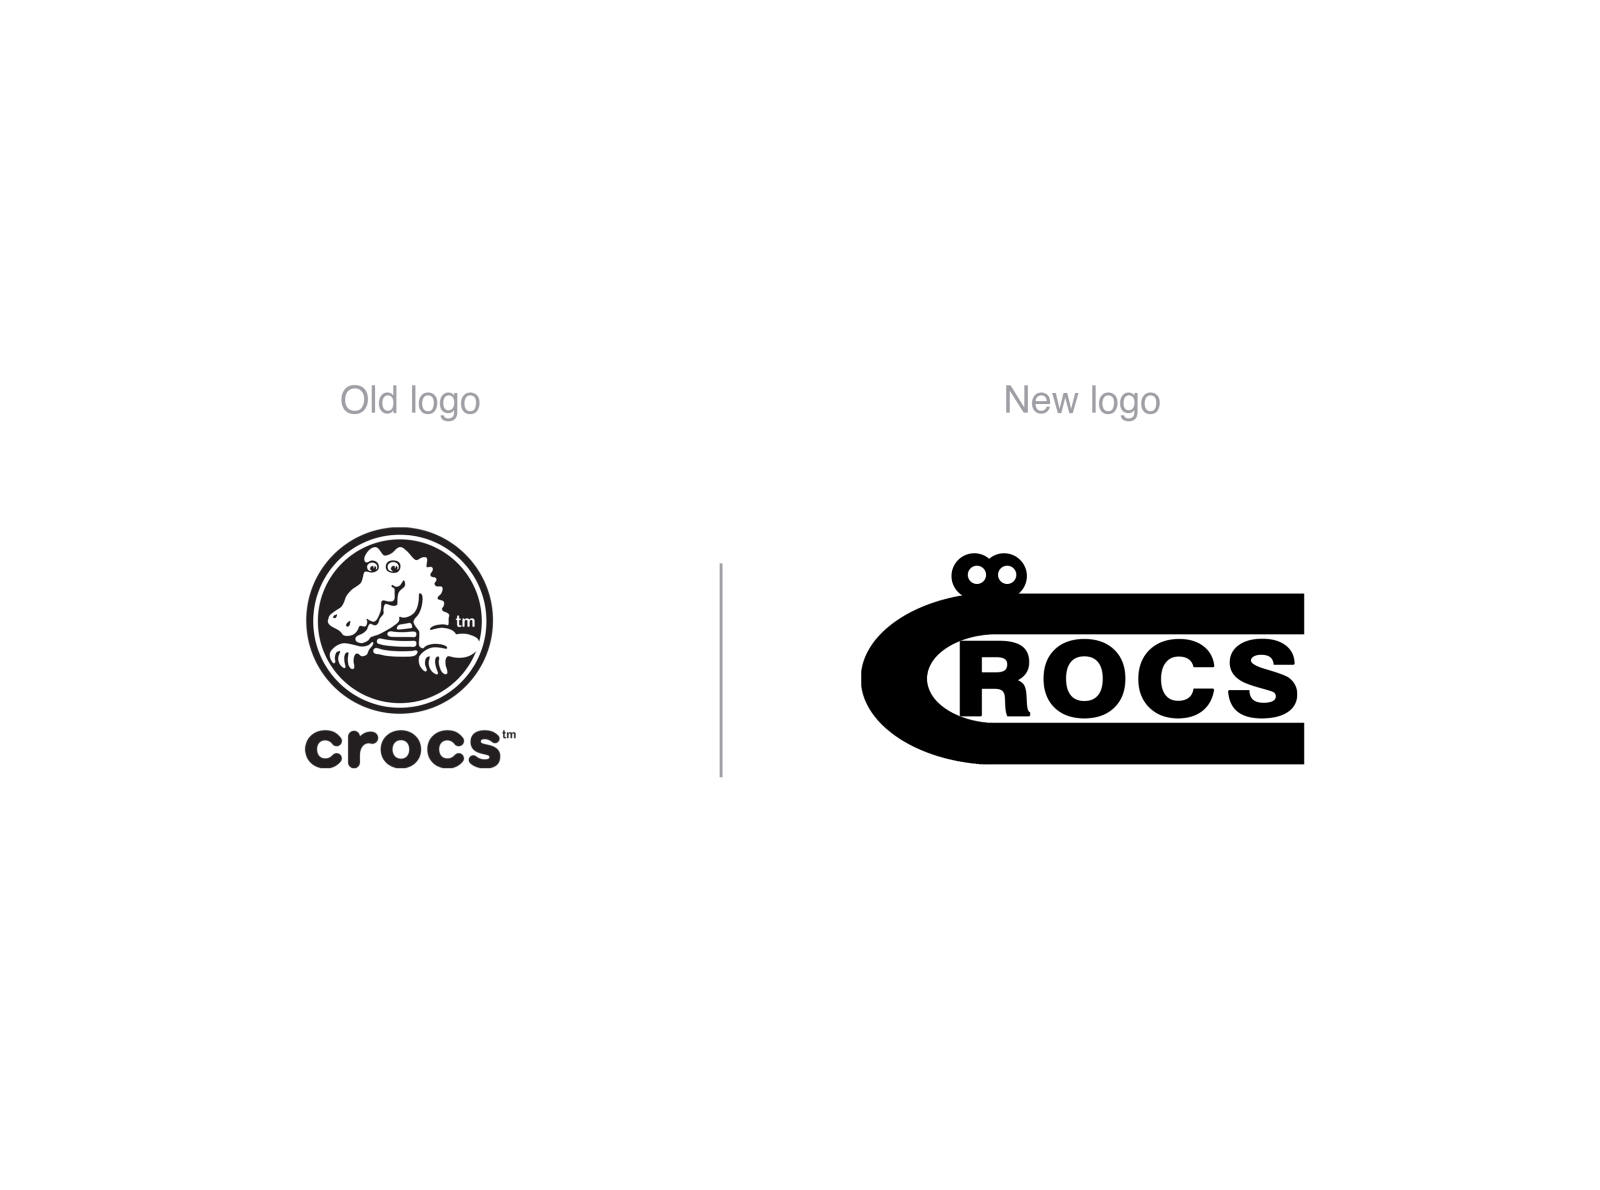 Crocs logo redesign by Shalini Sengar on Dribbble